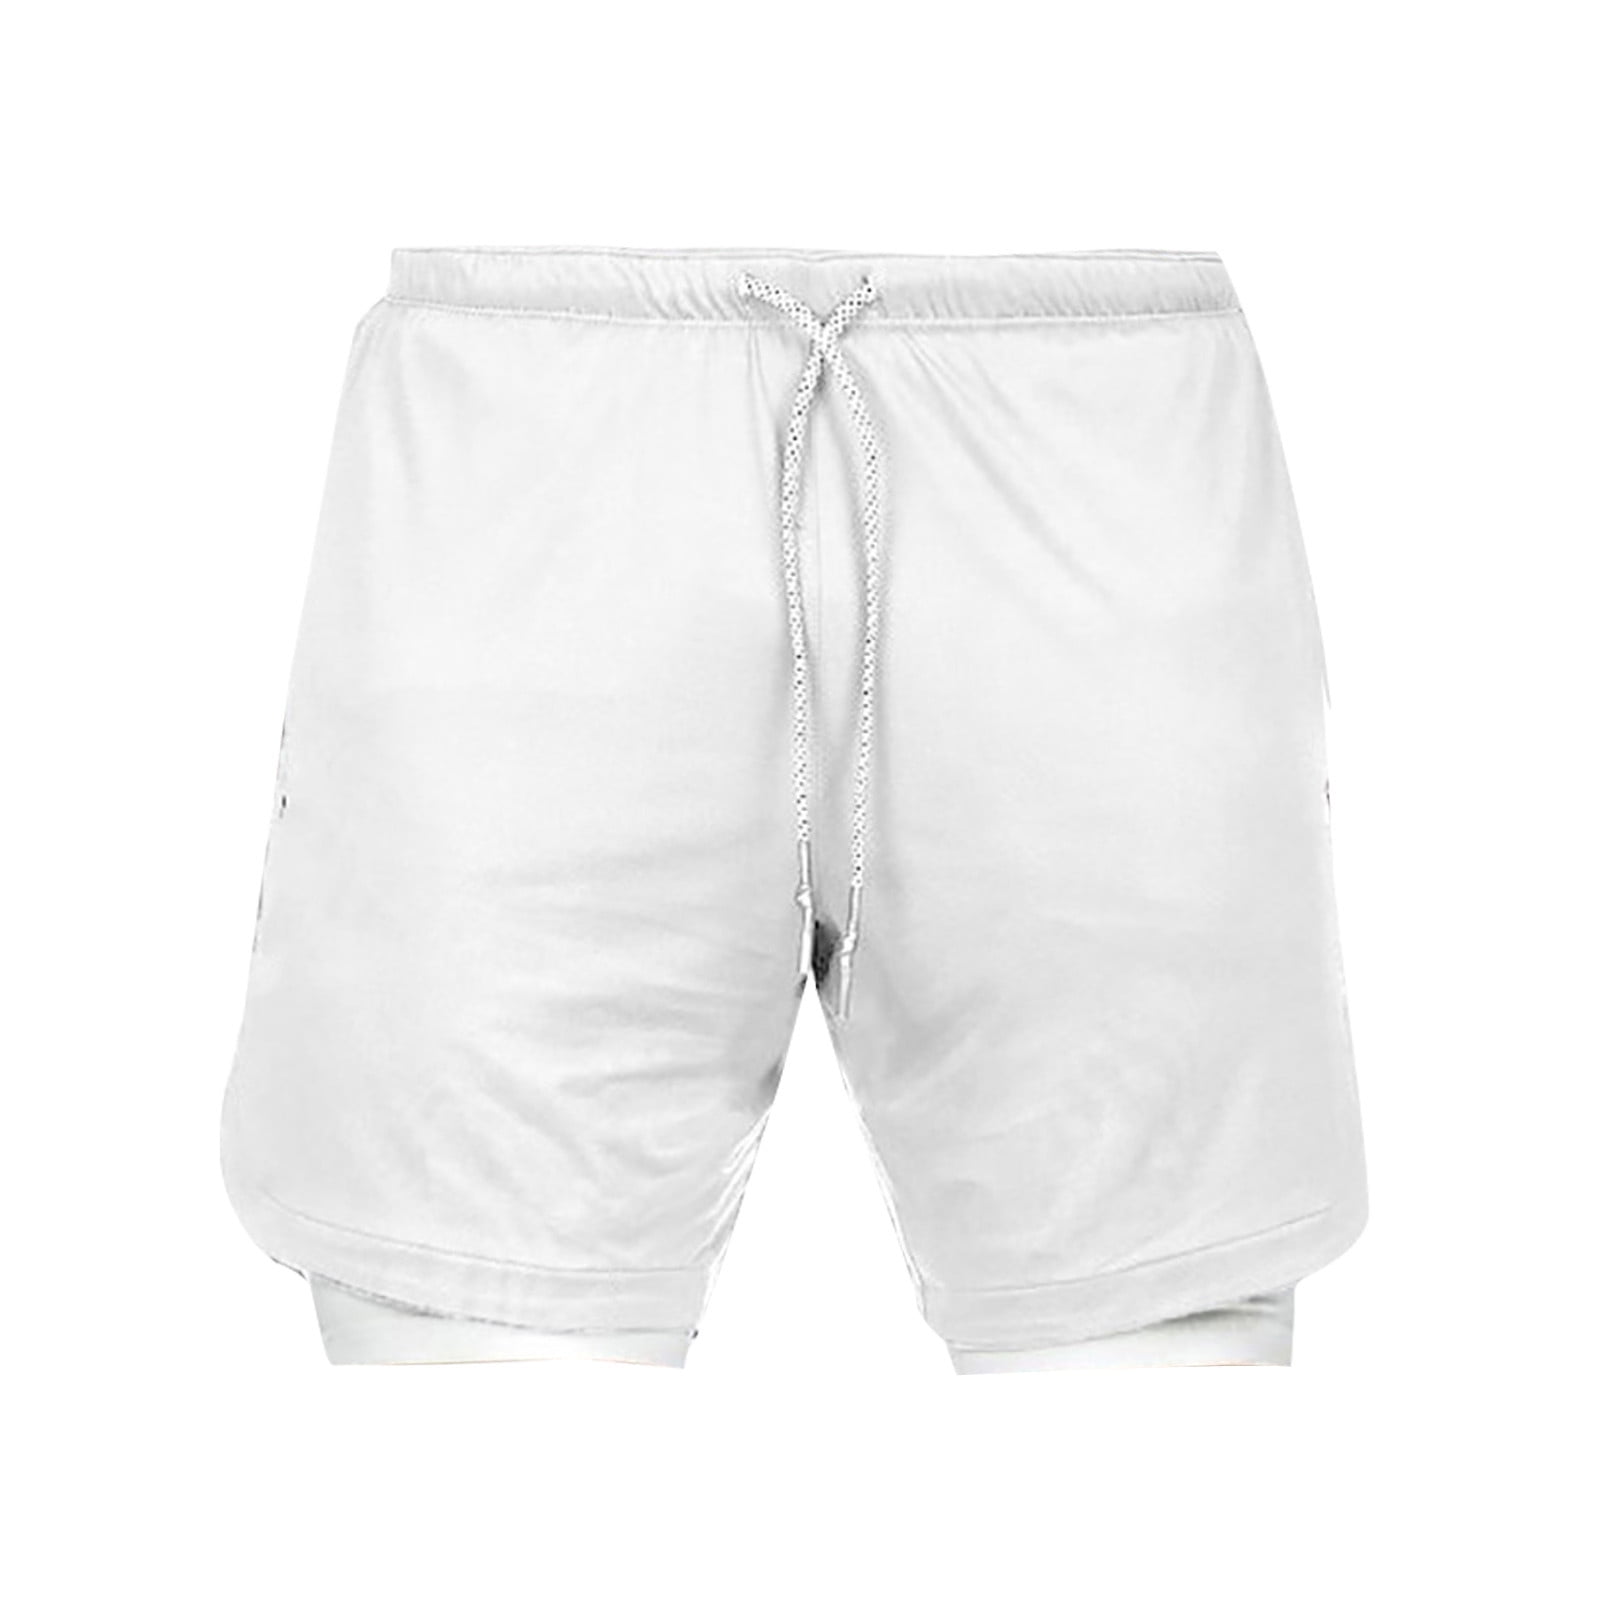 Athletic Shorts Mens Basic white striped elastic waist BRAND NEW Size Small 